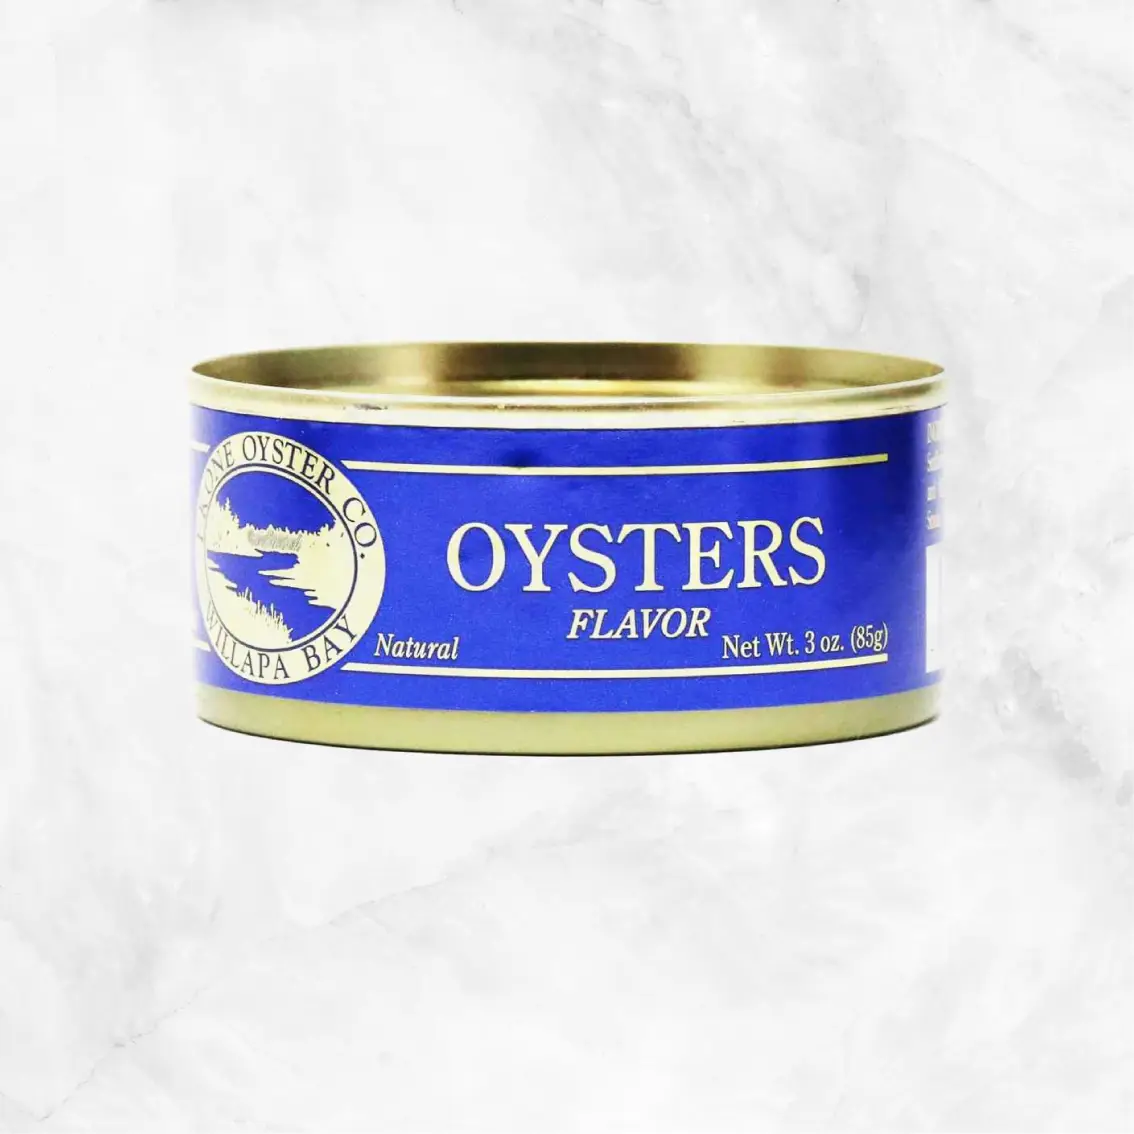 Original Smoked Oysters